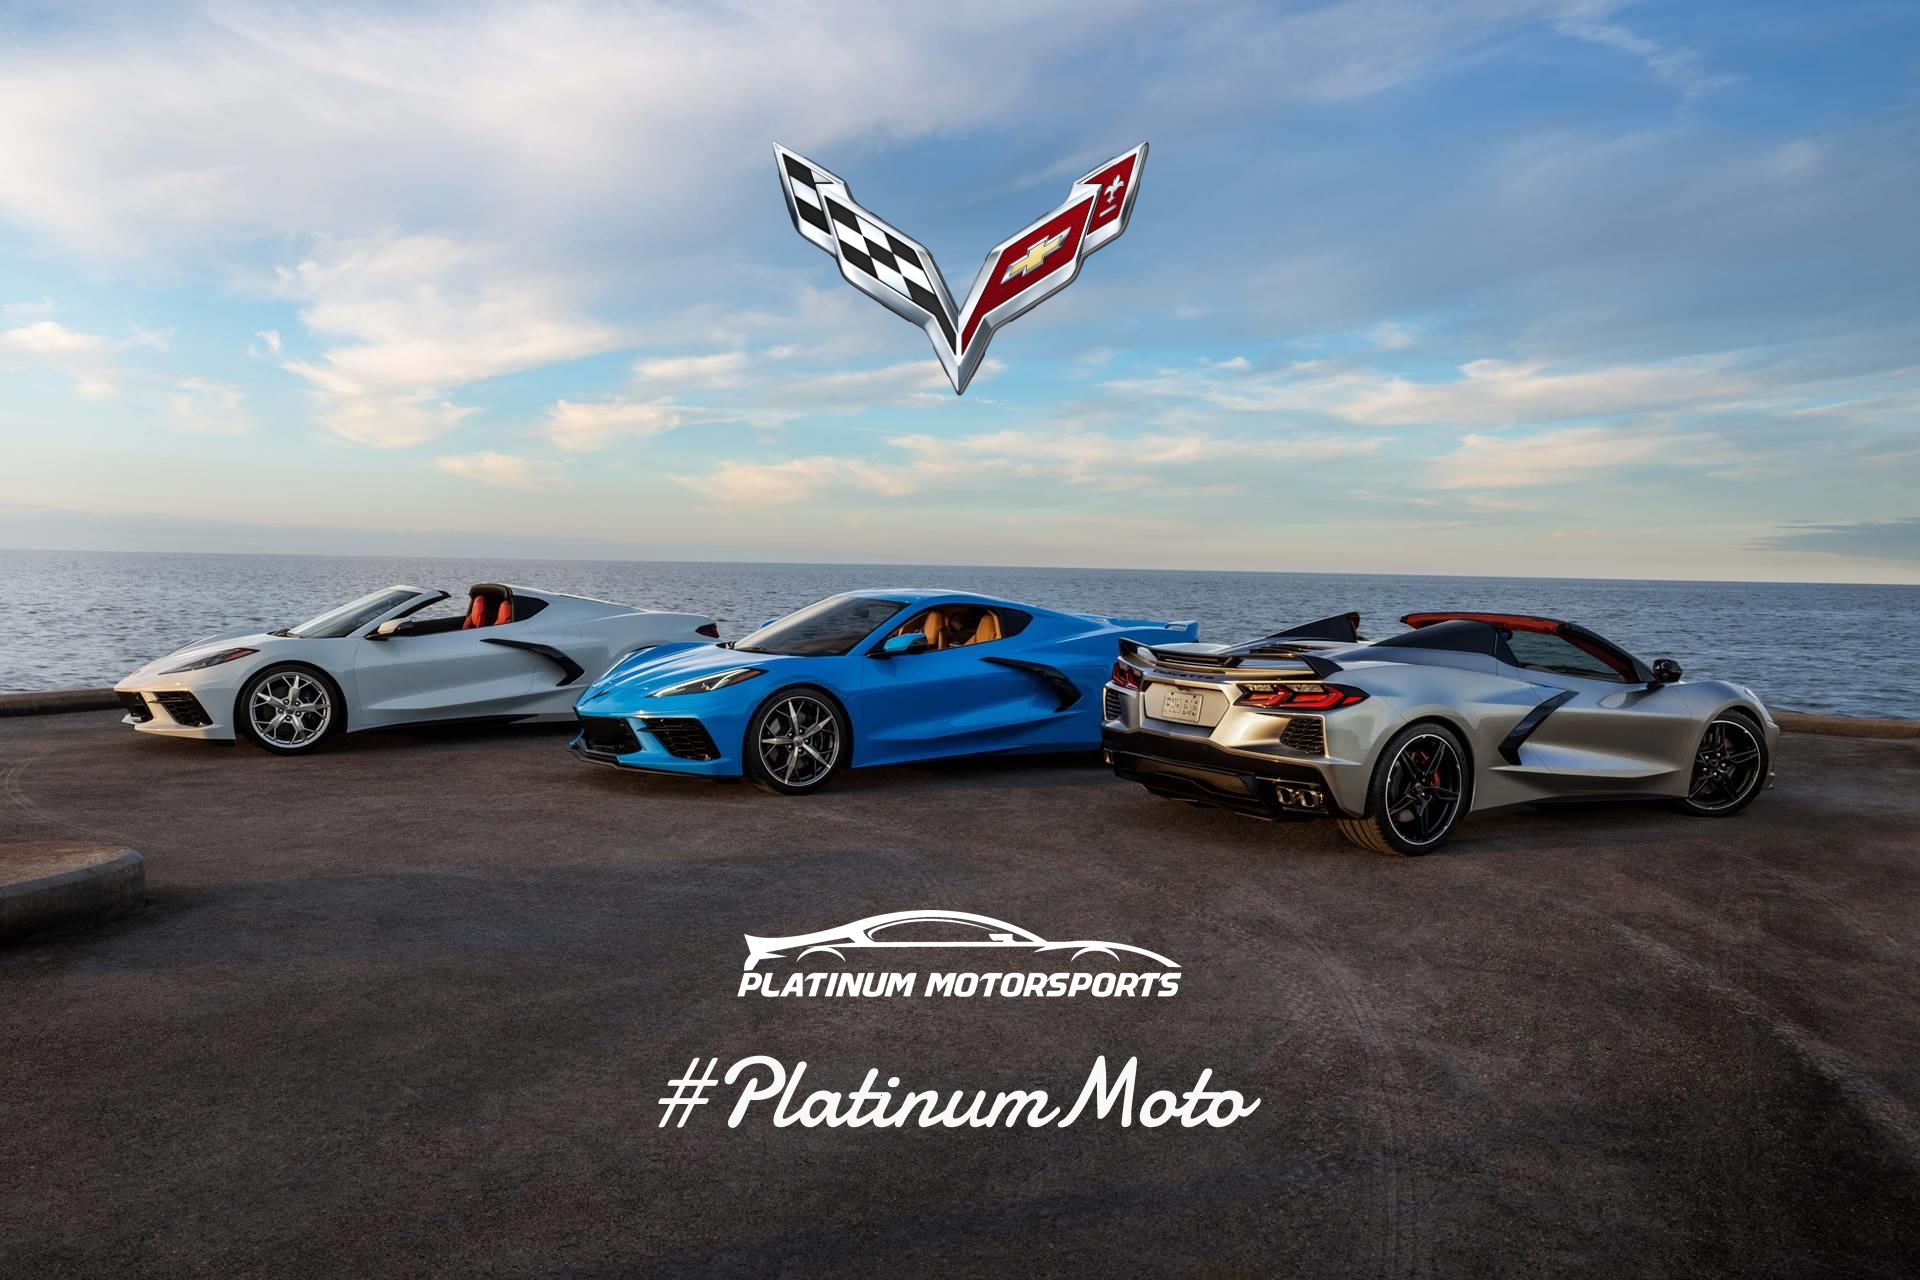 Platinum Motorsports